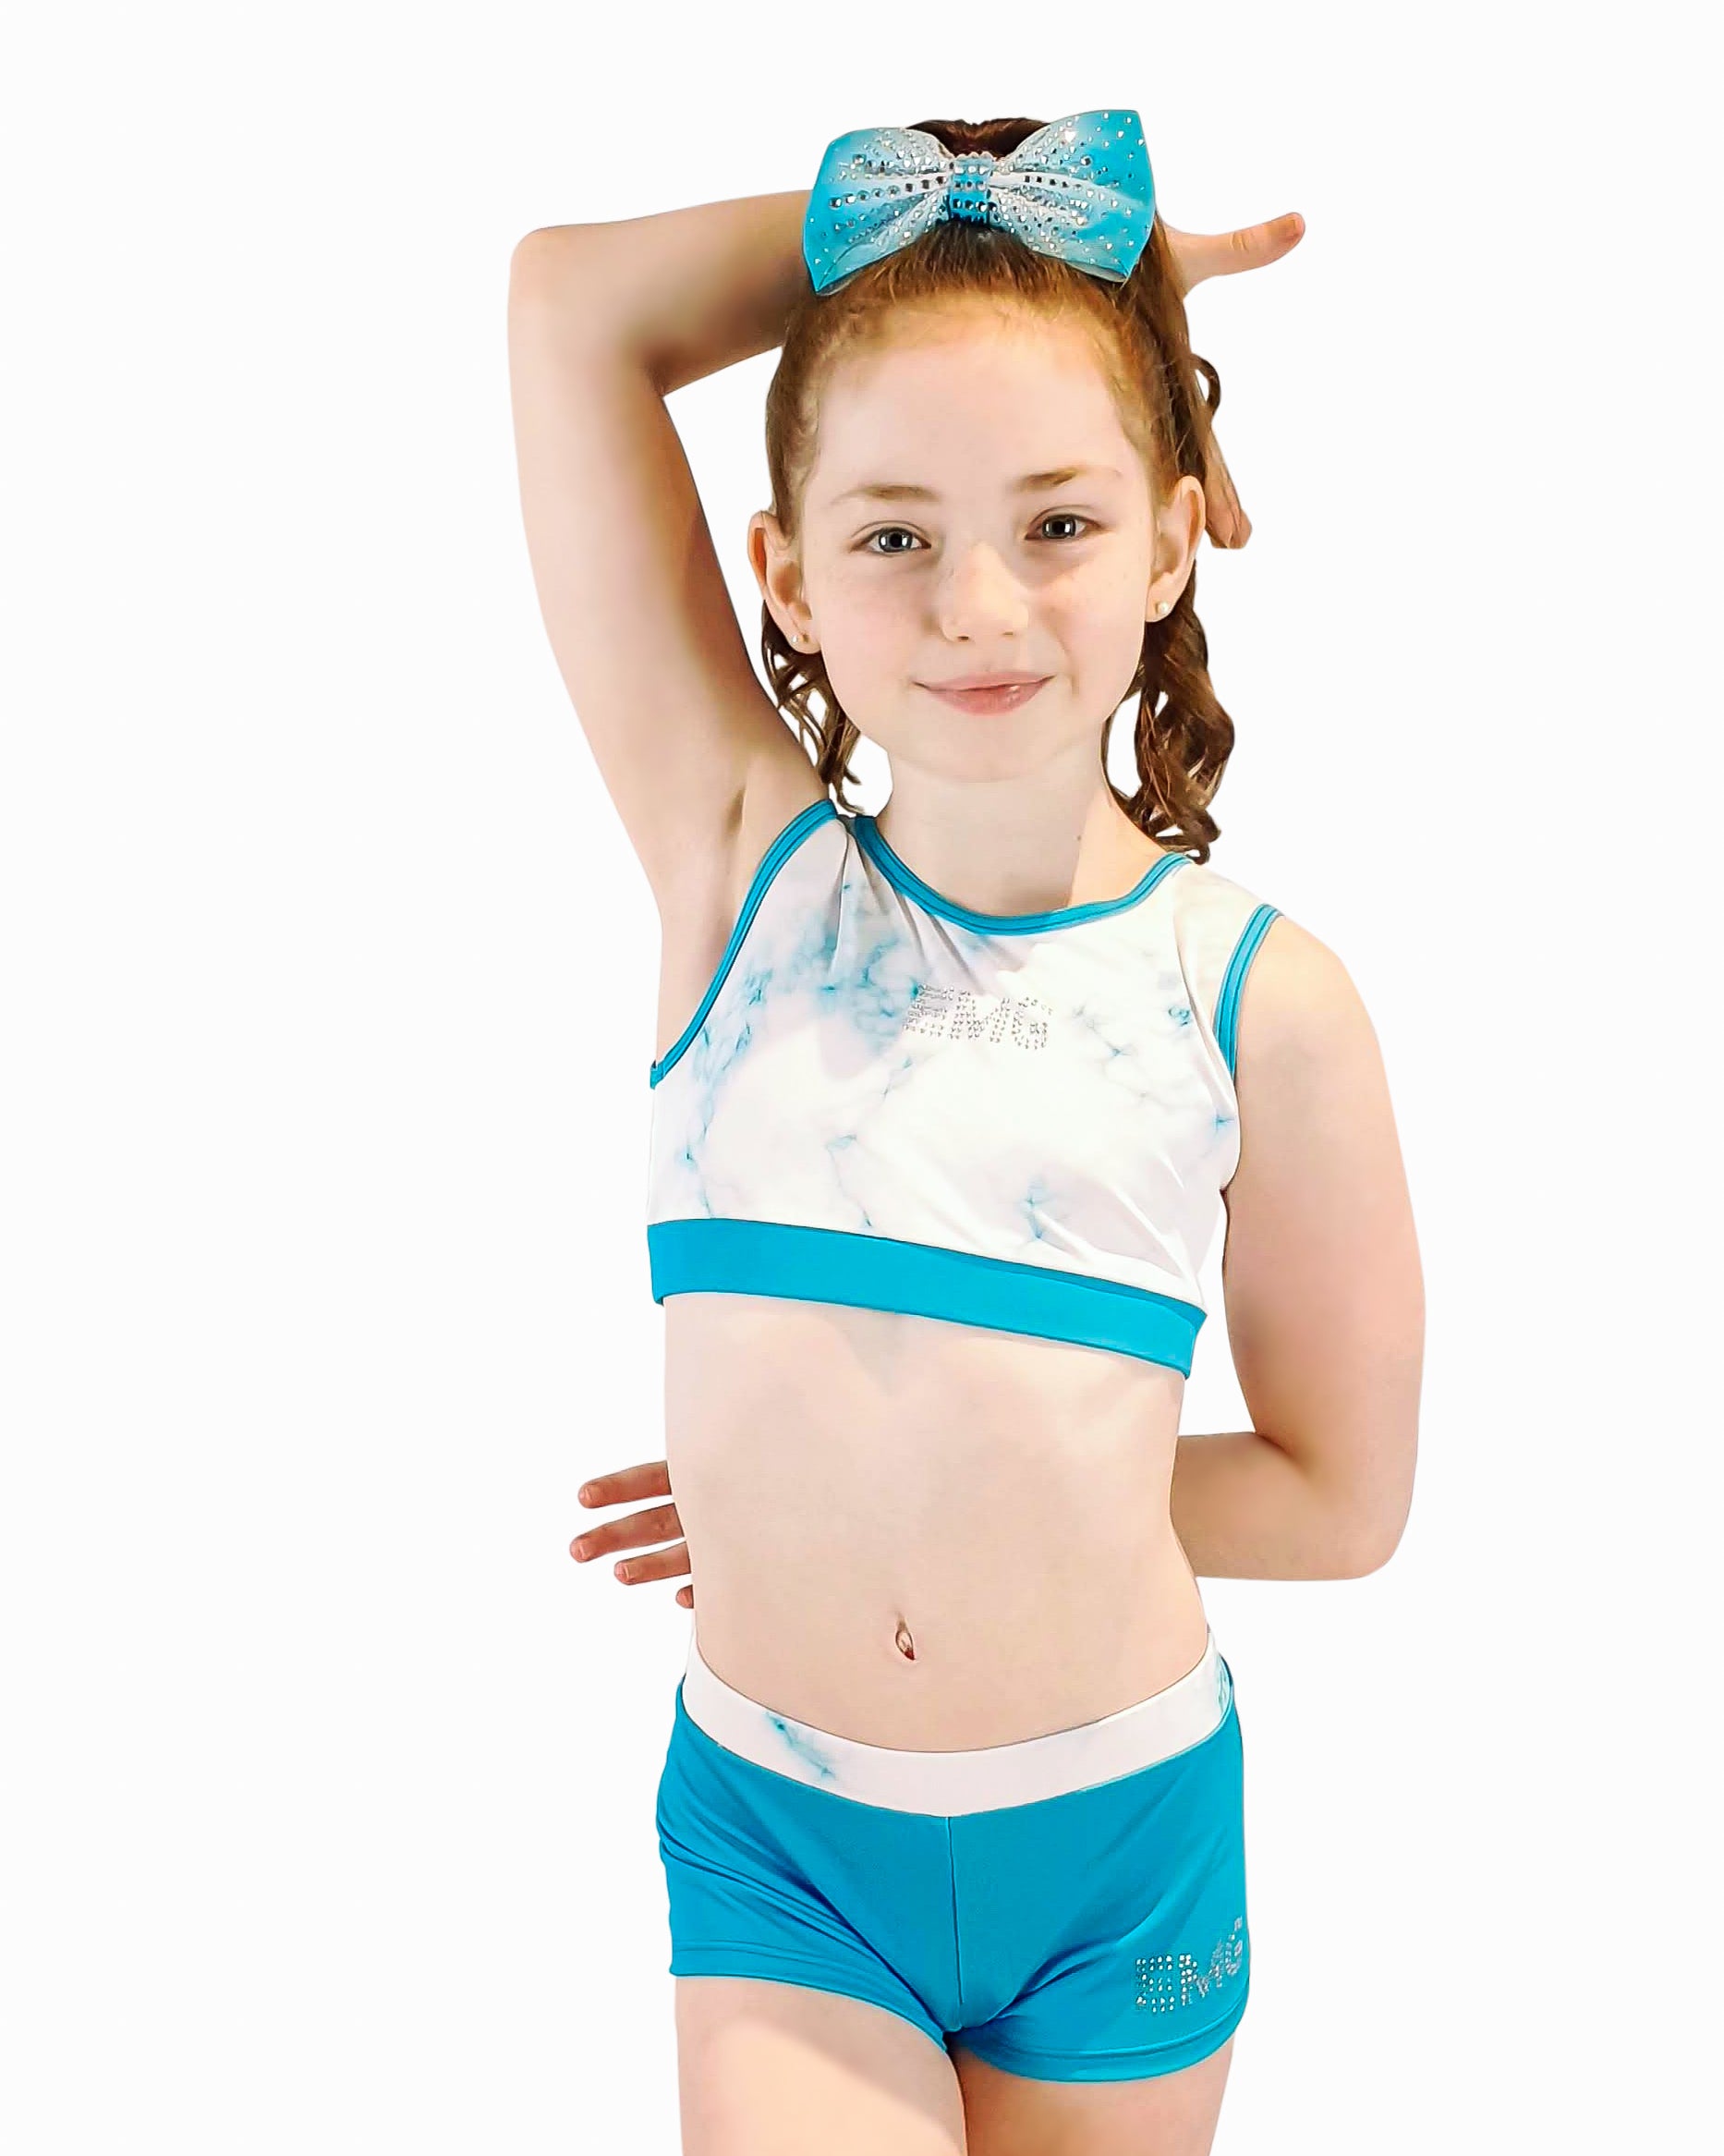 EUPHORIA TURQUOISE CROP TOP SET Girls Gymnastics | Equip My Gym A